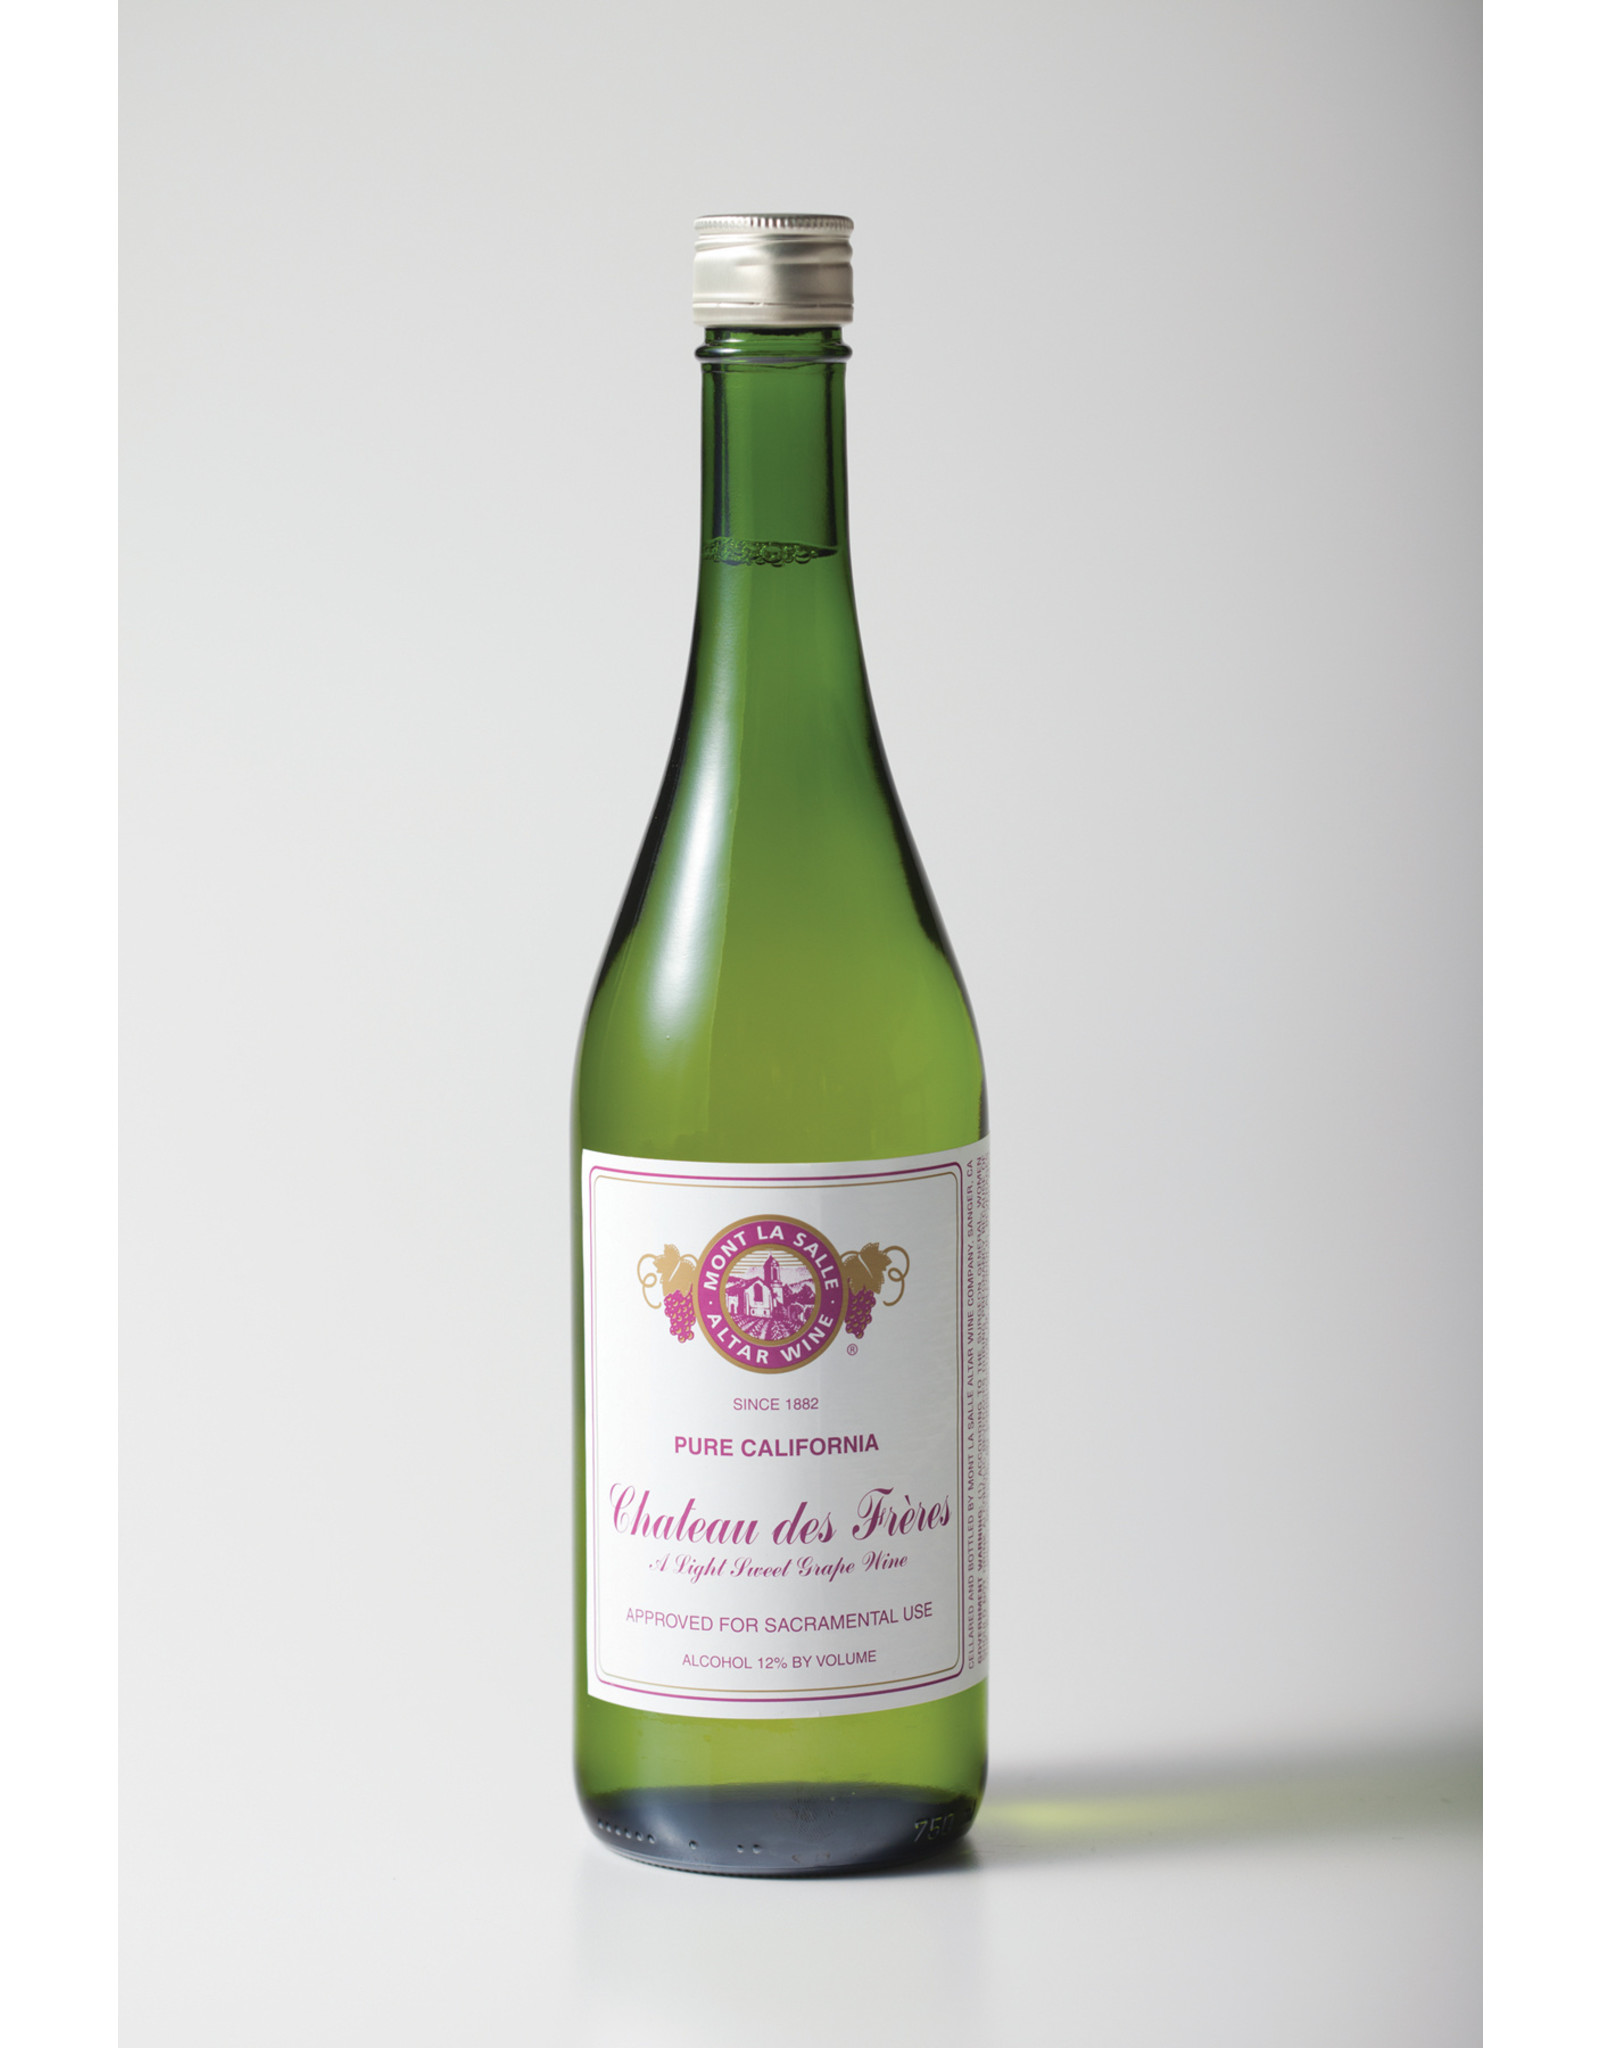 $93.00 Chateau de Frere Bottles, CANNOT BE SOLD ONLINE, CALL TO ORDER Chateau de Frere (12 750-ml Bottles) Wine